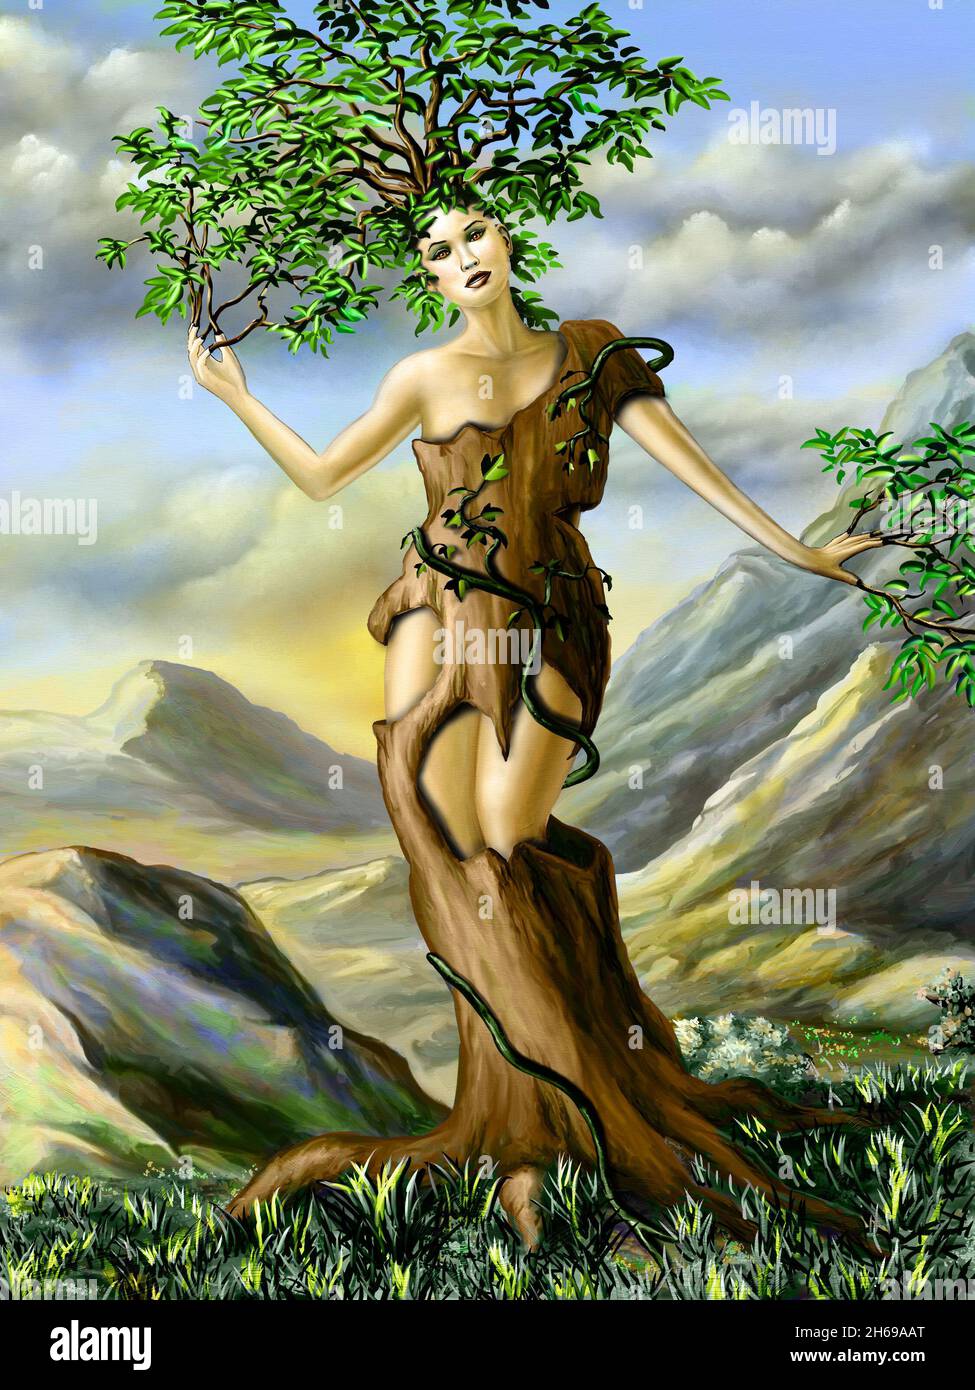 Fantasy portrait of an half girl, half tree creature. Digital illustration. Stock Photo